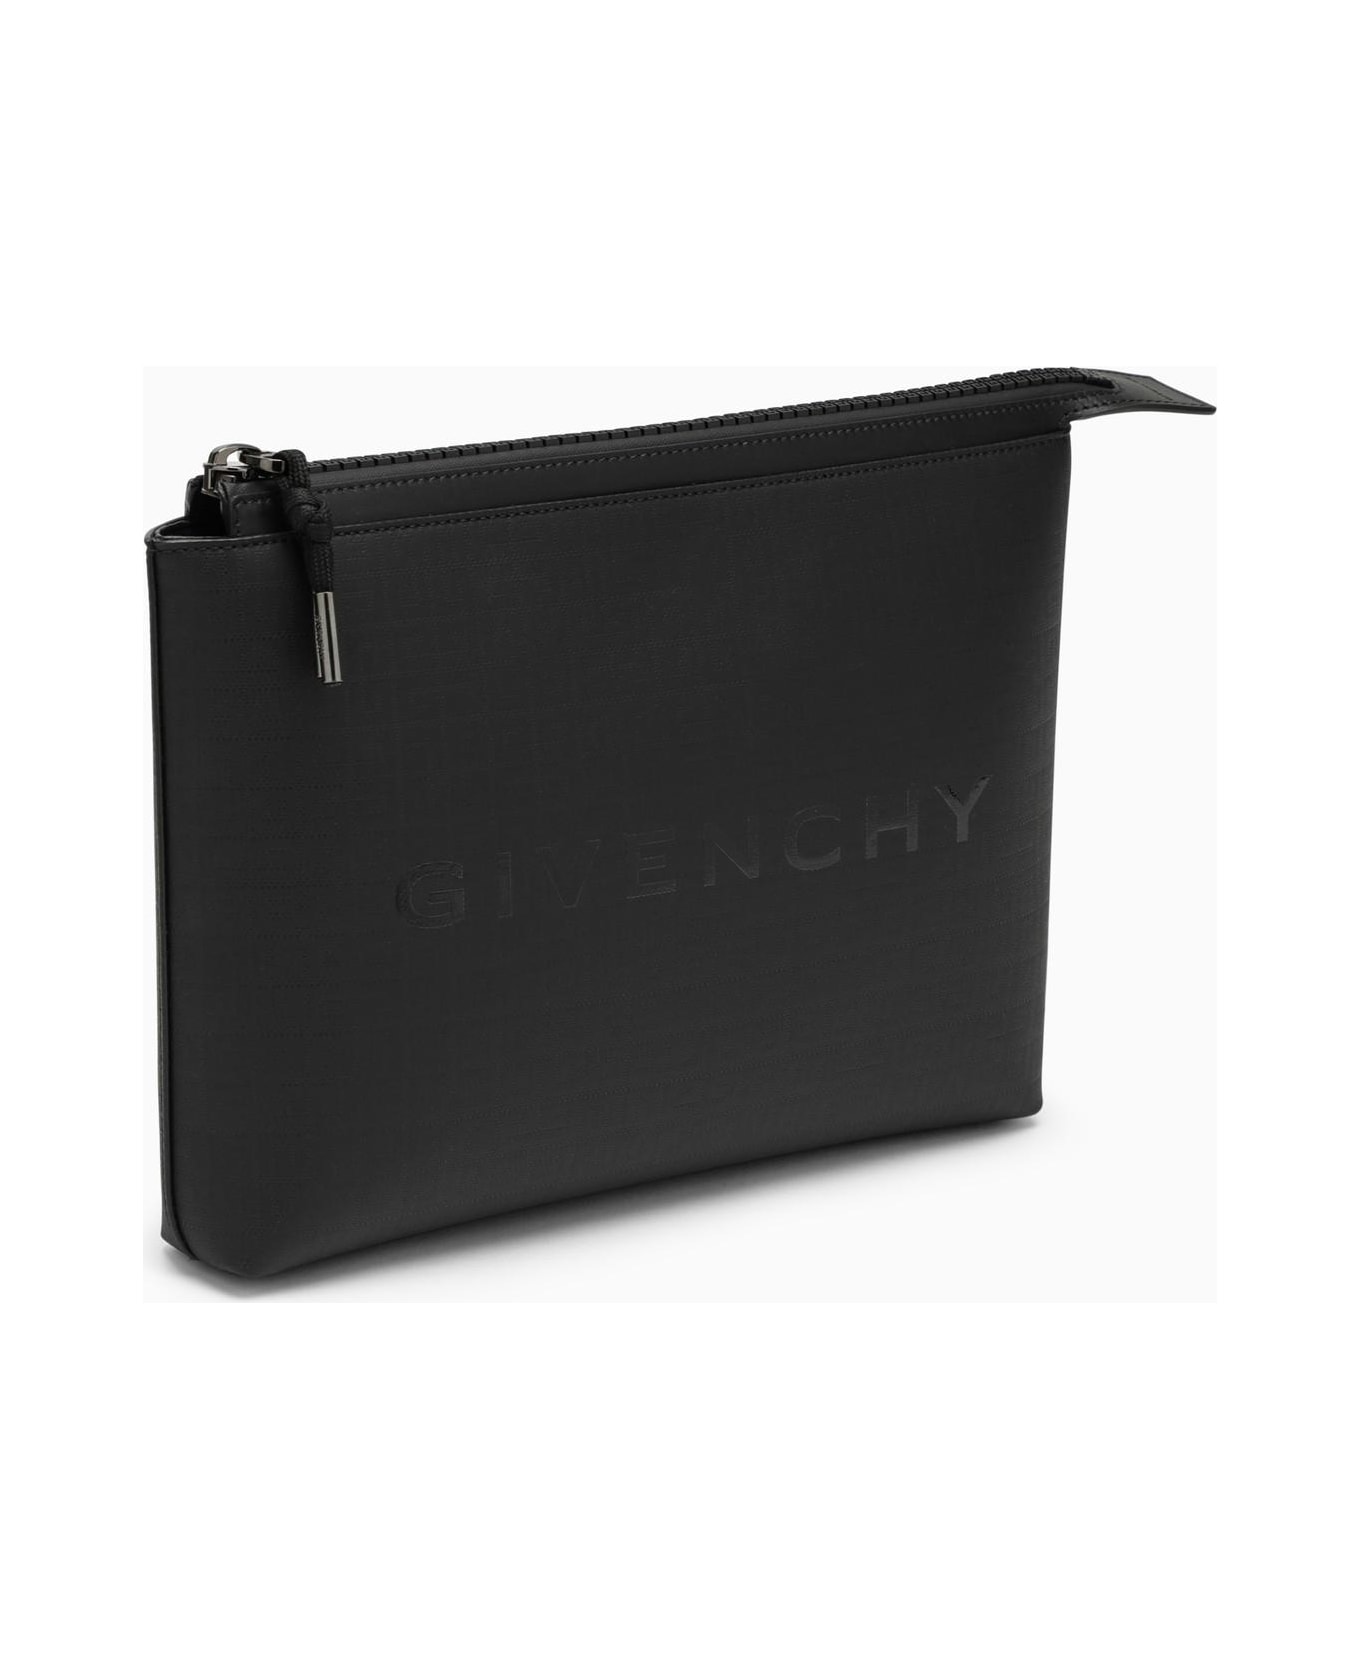 Givenchy Medium Pouch In 4g Nylon - Black 財布